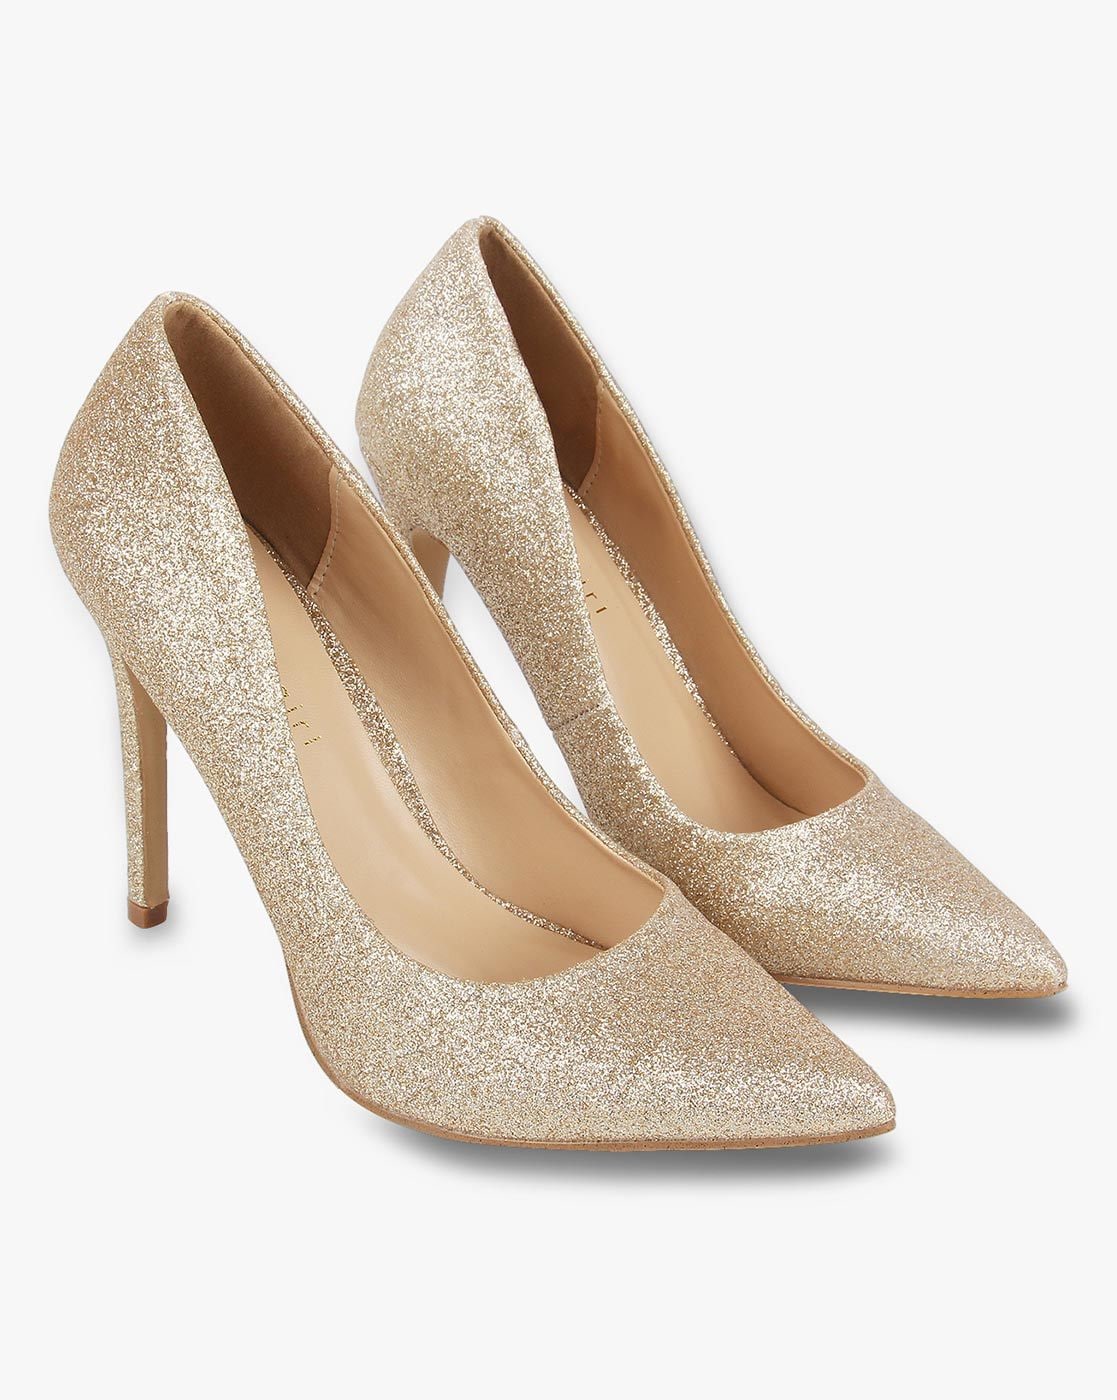 Adirana - Made to order - Gold Glitter Bridal Pump - Burju Shoes